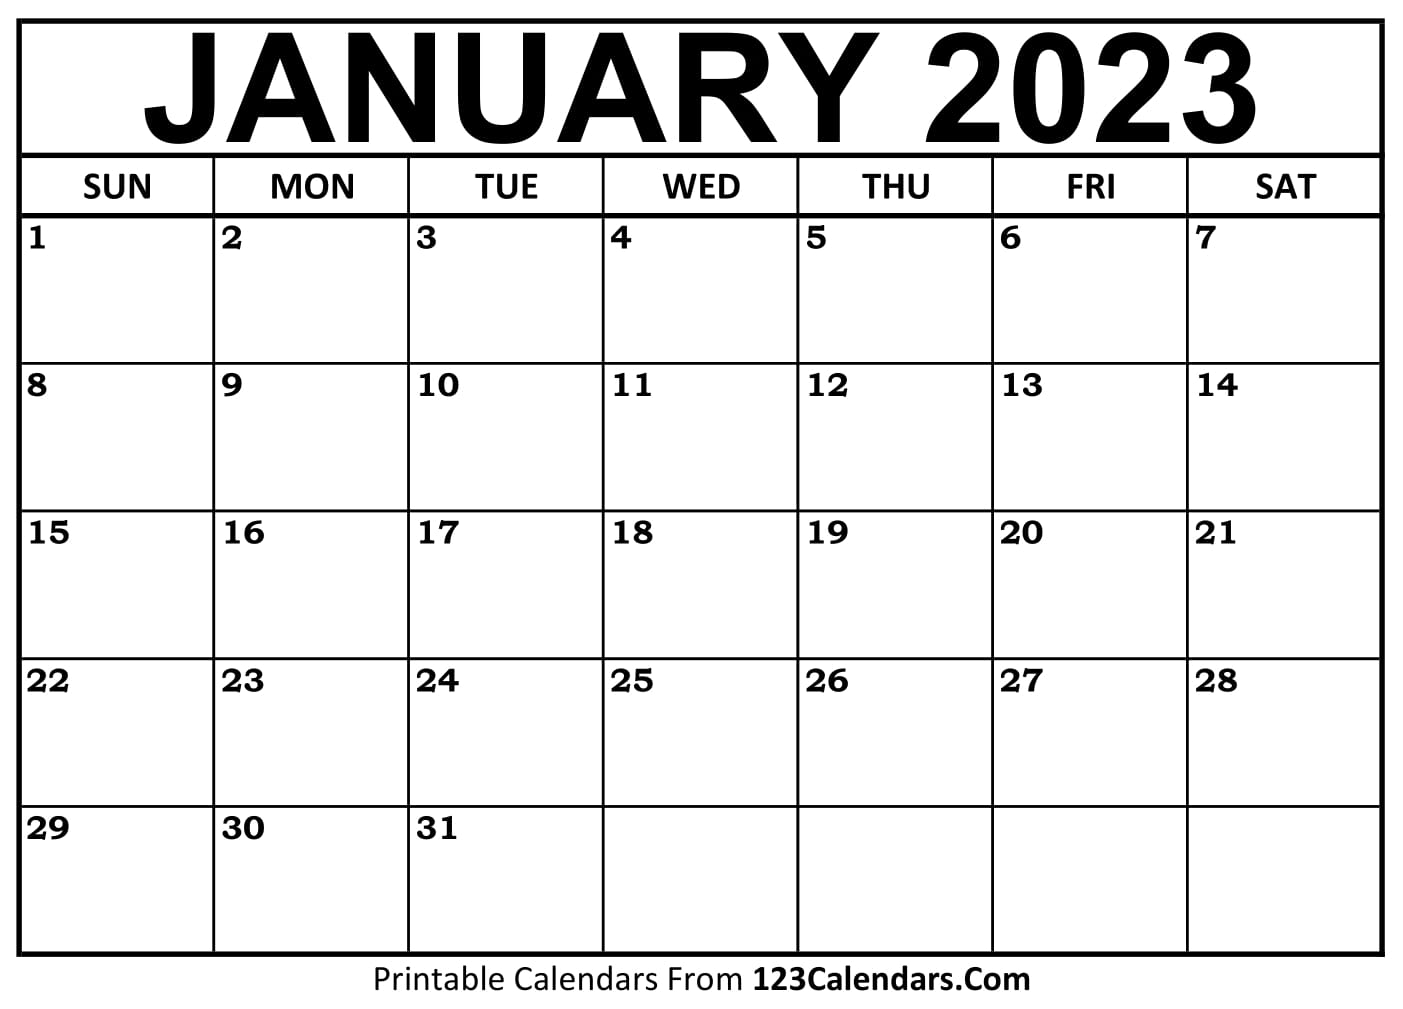 january-2023-calendar-word-template-martin-printable-calendars